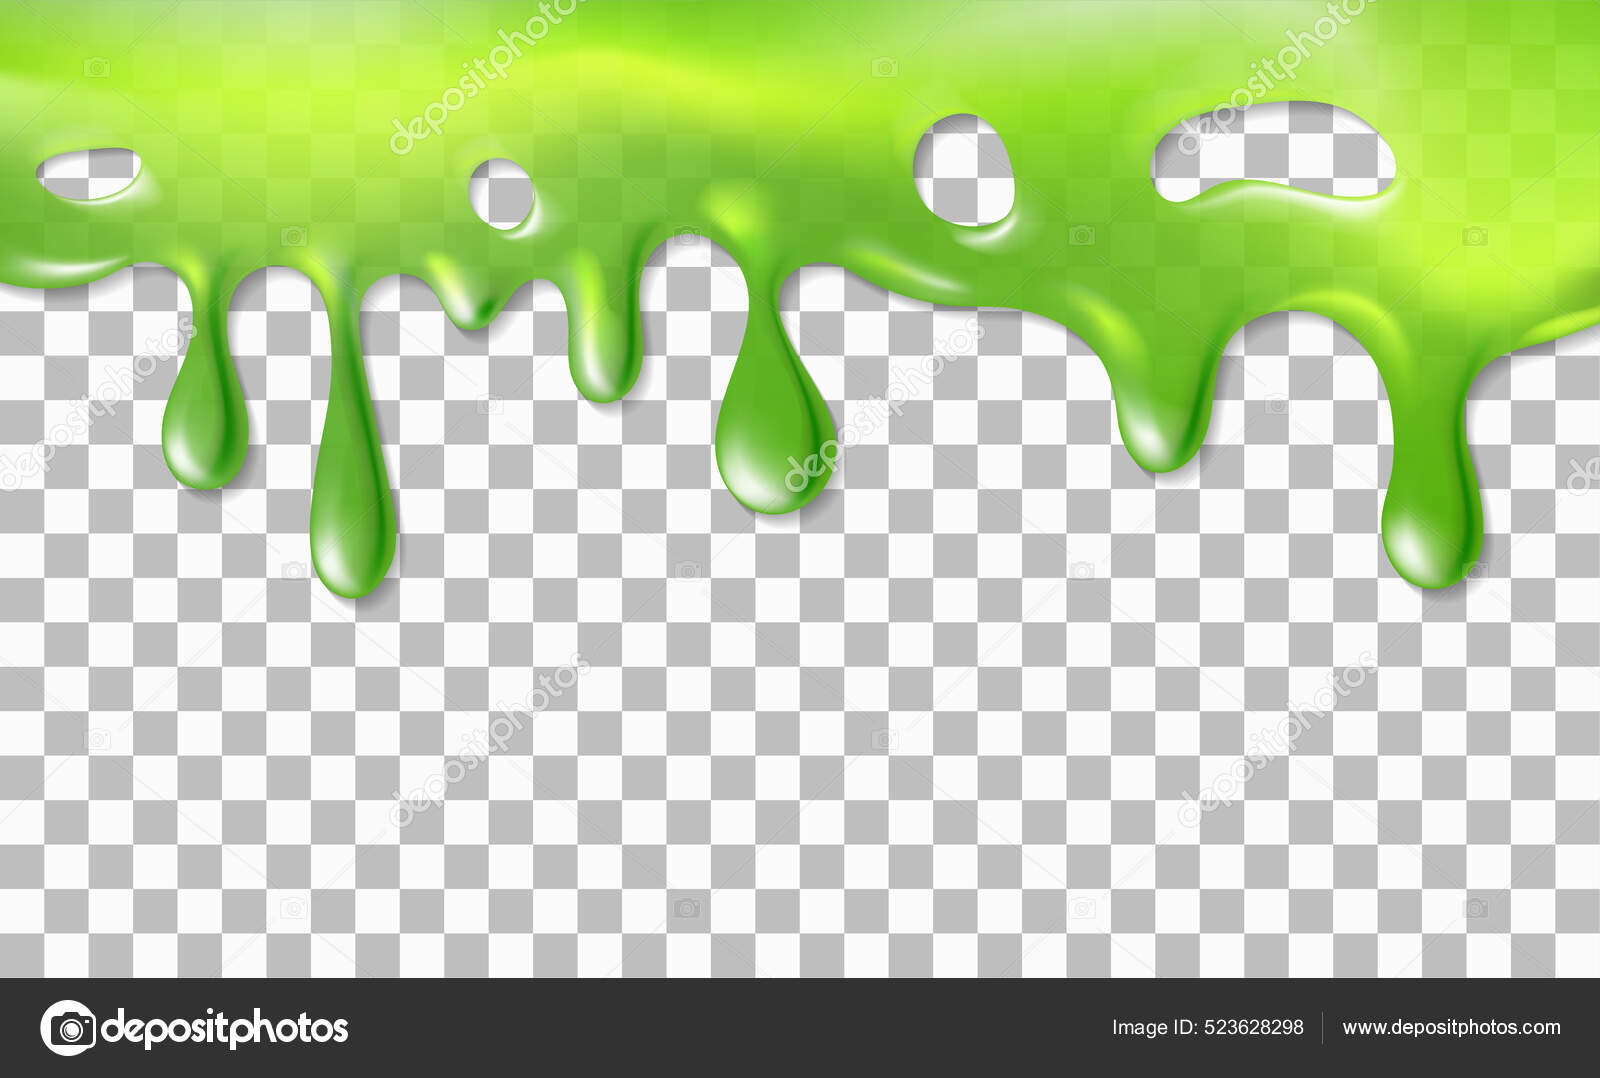 https://st.depositphotos.com/1045877/52362/v/1600/depositphotos_523628298-stock-illustration-realistic-green-sticky-slime-illustration.jpg